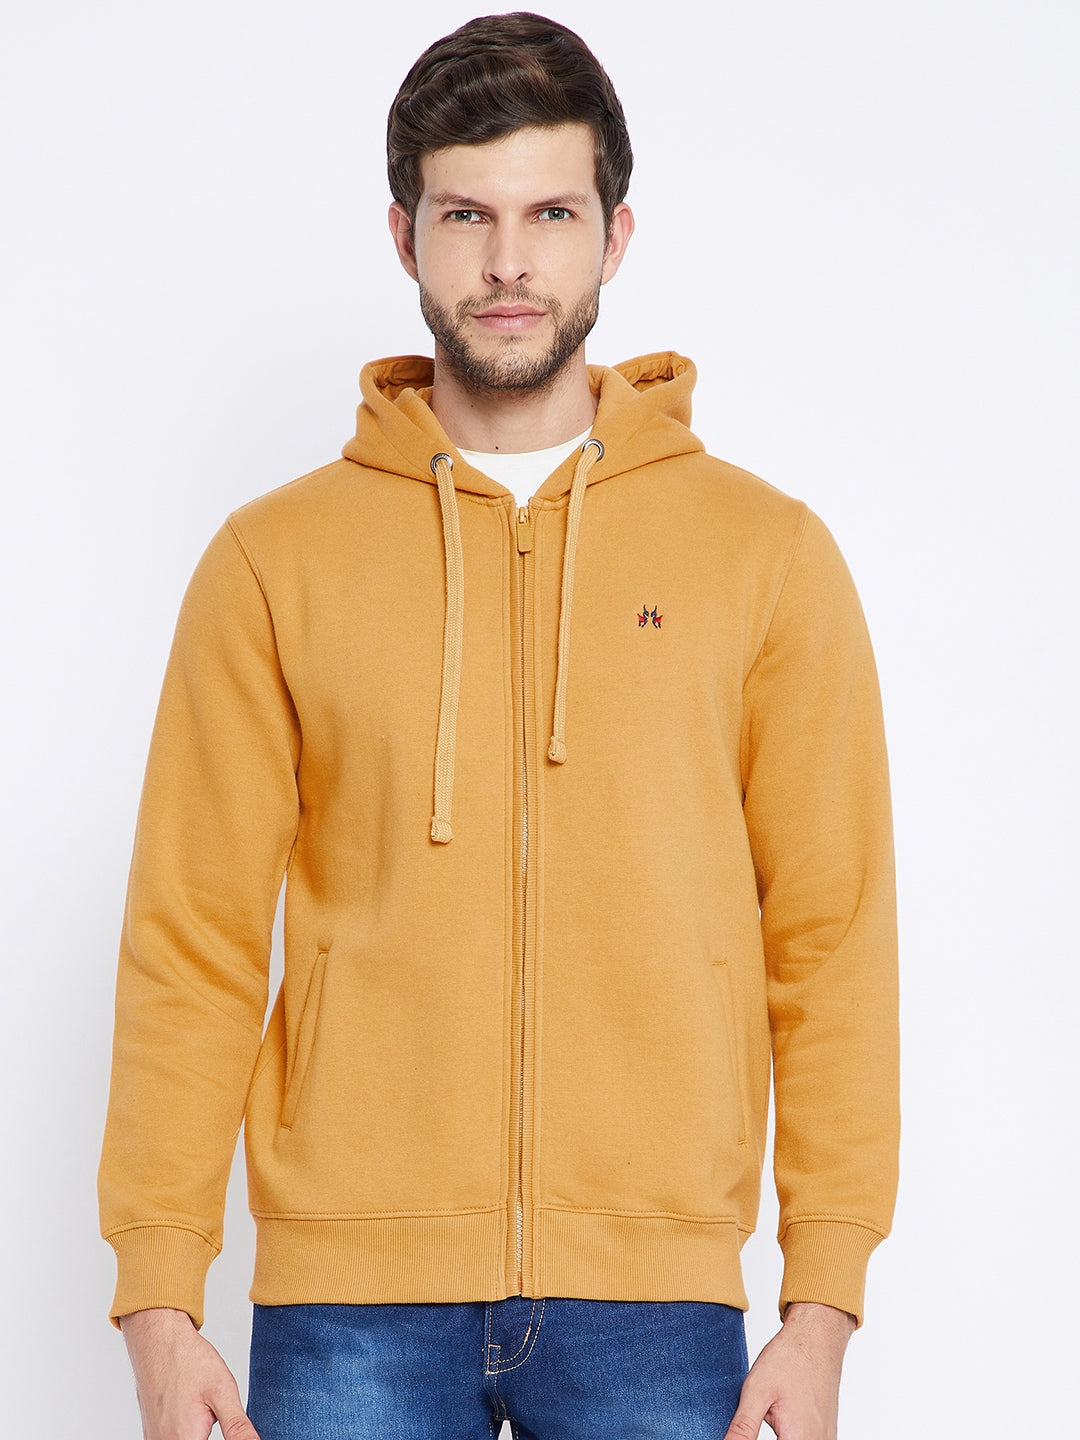 Mustard Hooded Sweatshirt - Men Sweatshirts